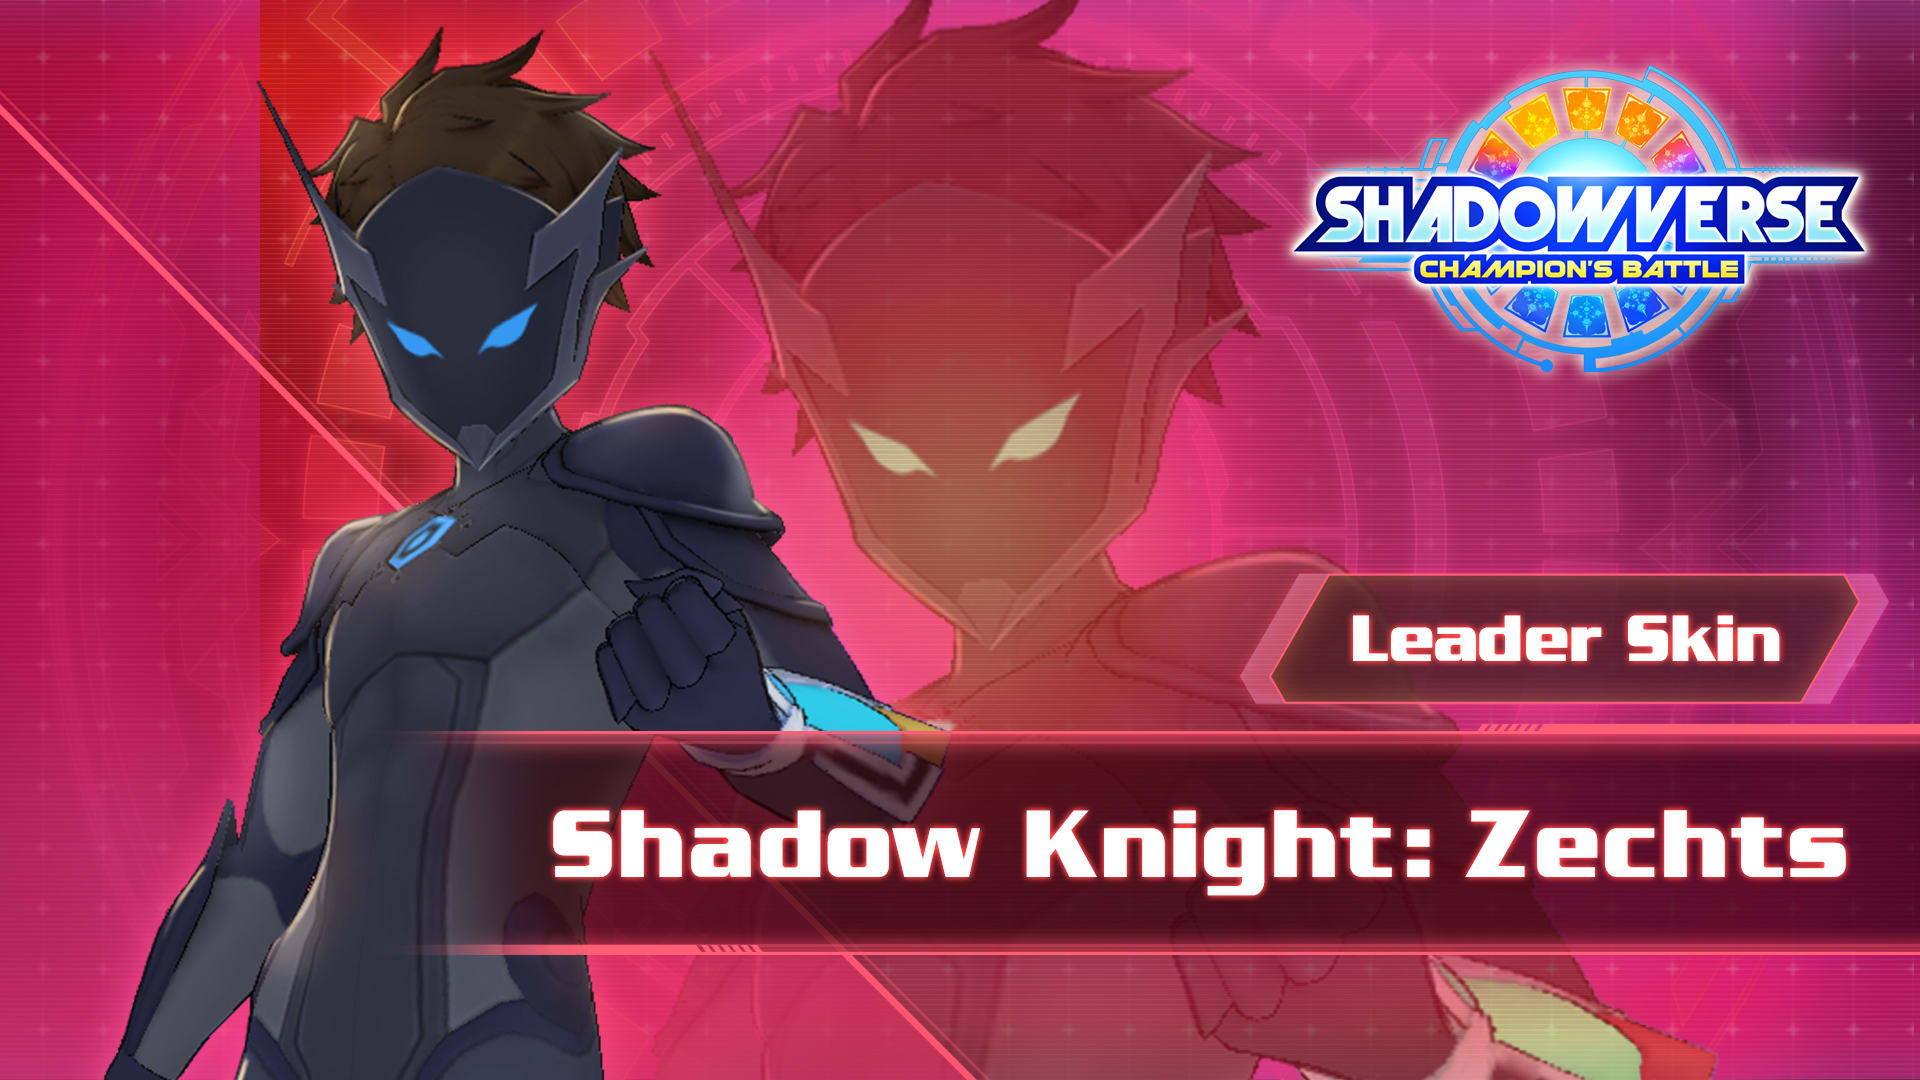 Leader Skin: "Shadow Knight: Zechts"